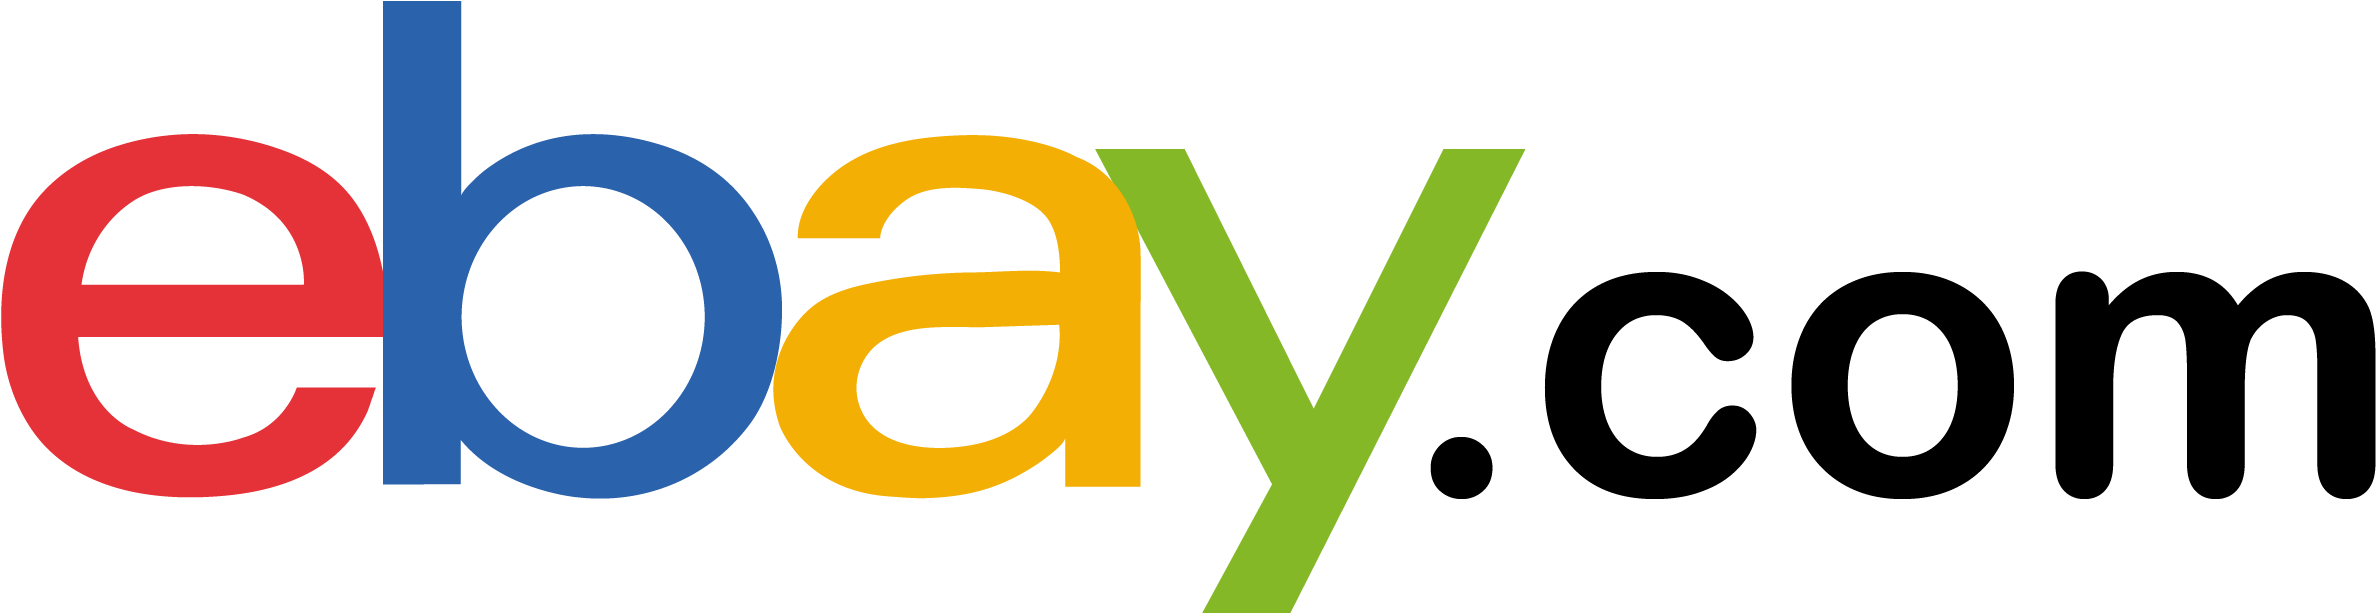 ebay logo PNG صورة شفافة